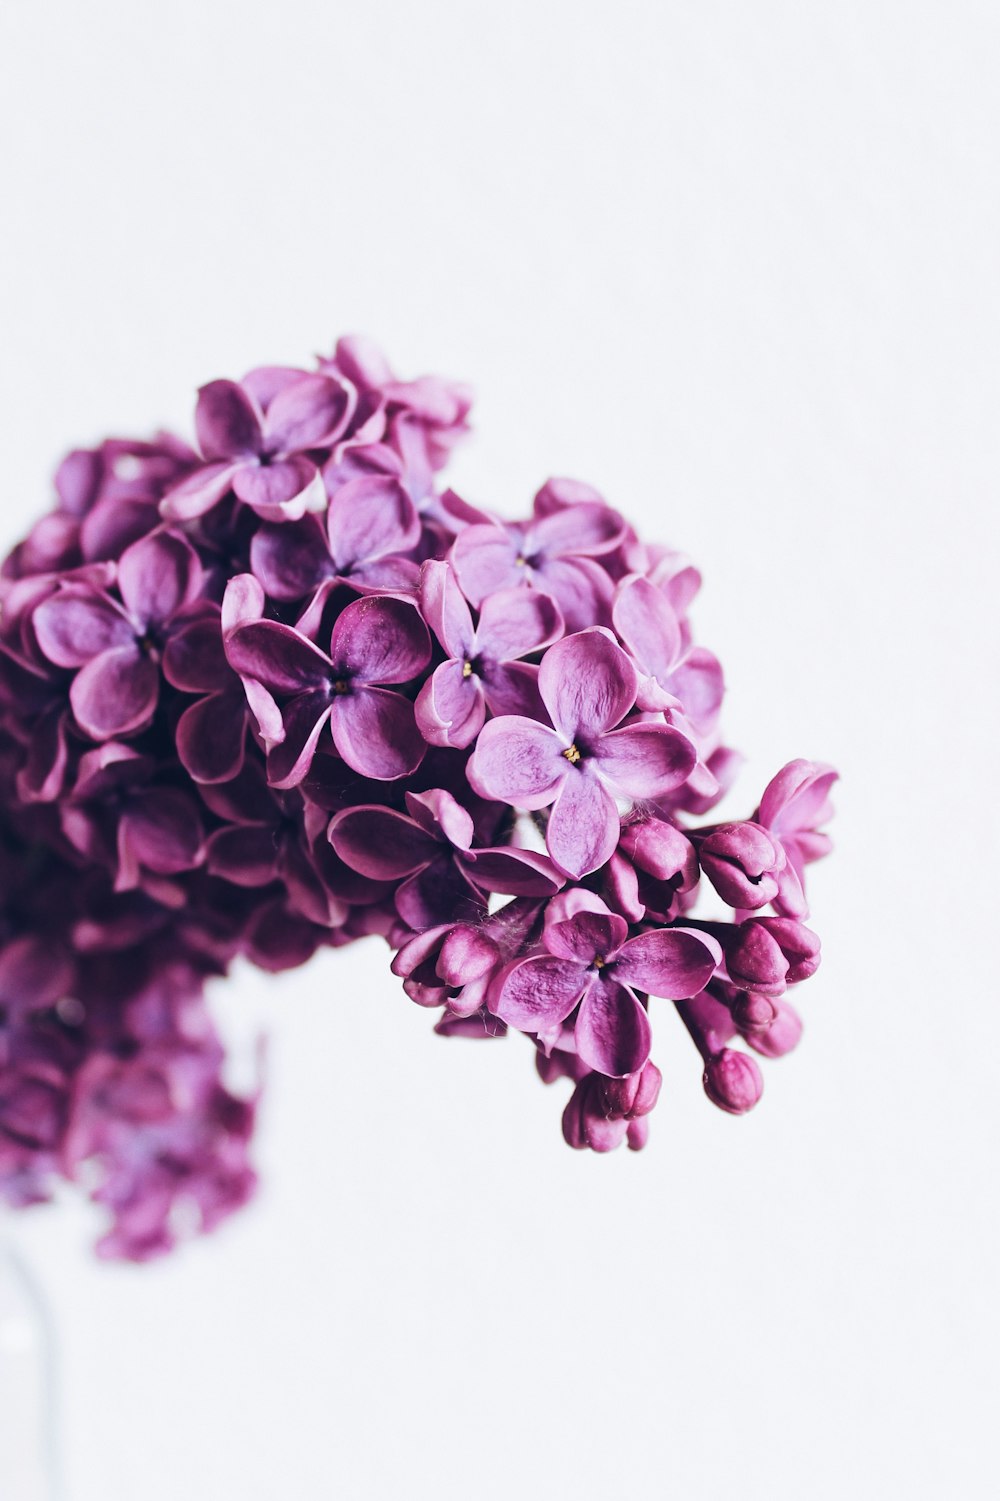 purple flower selective focus photography